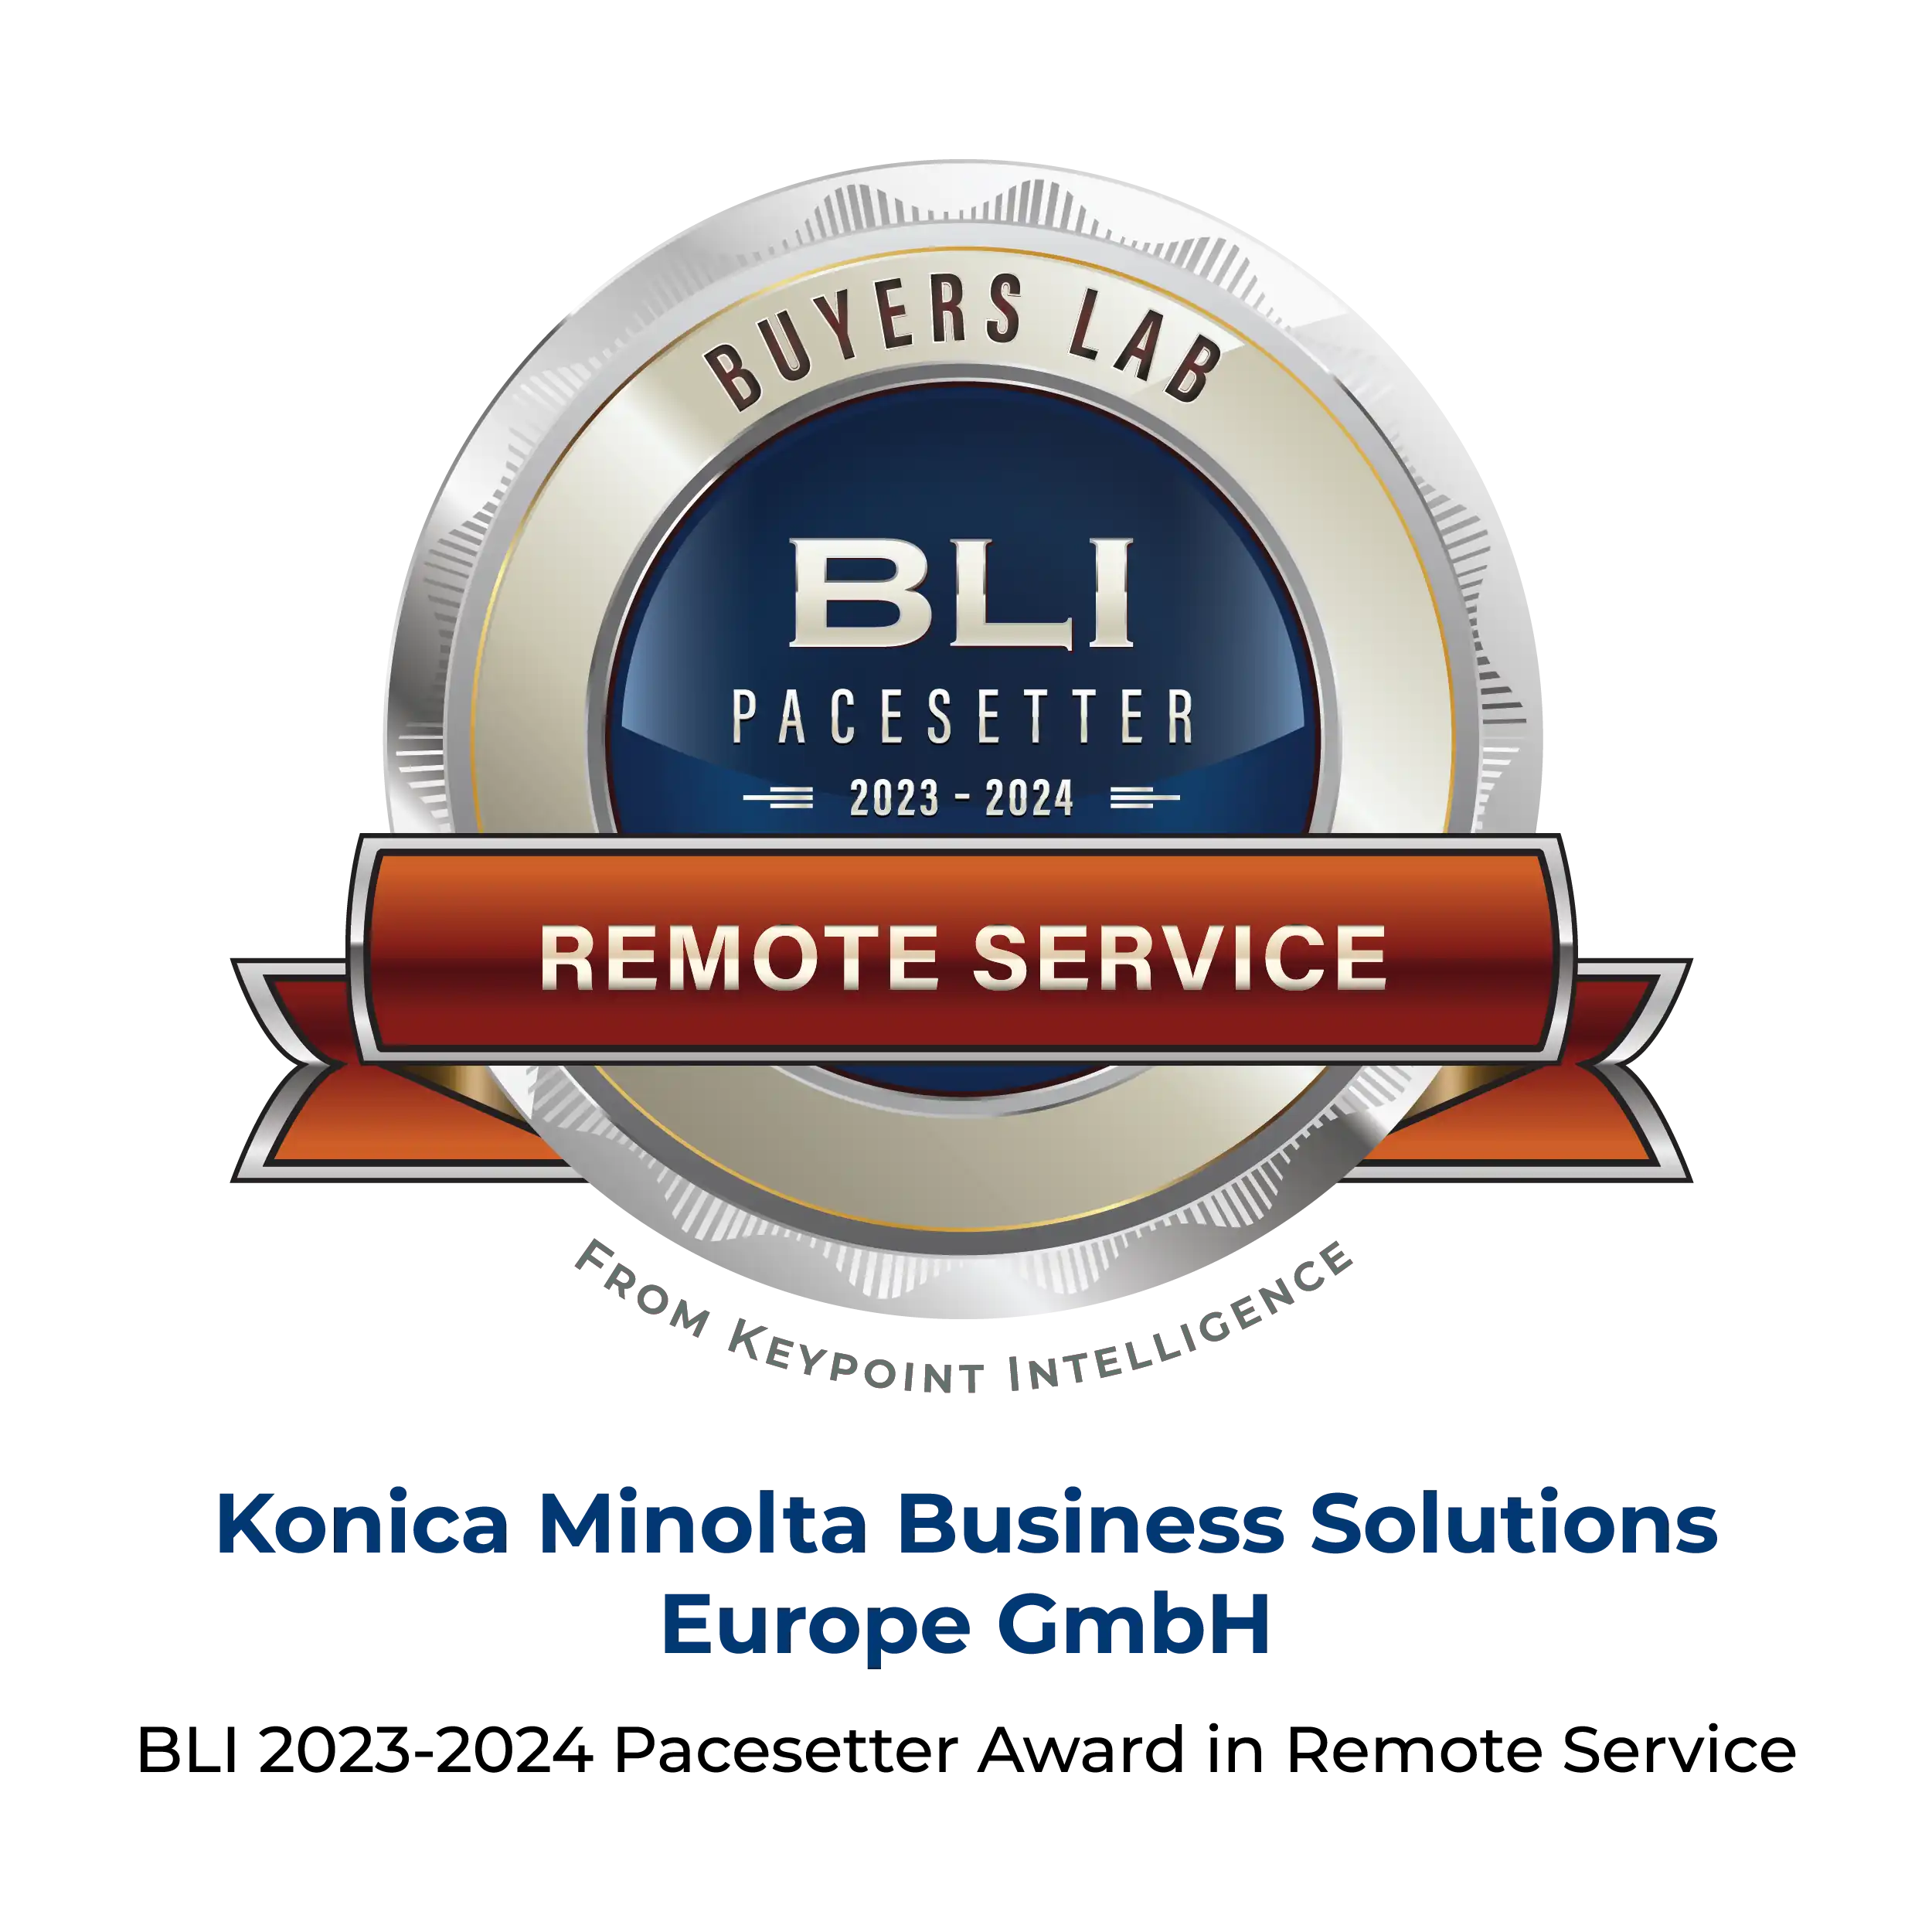  DU BLI Remote Services Award 2022